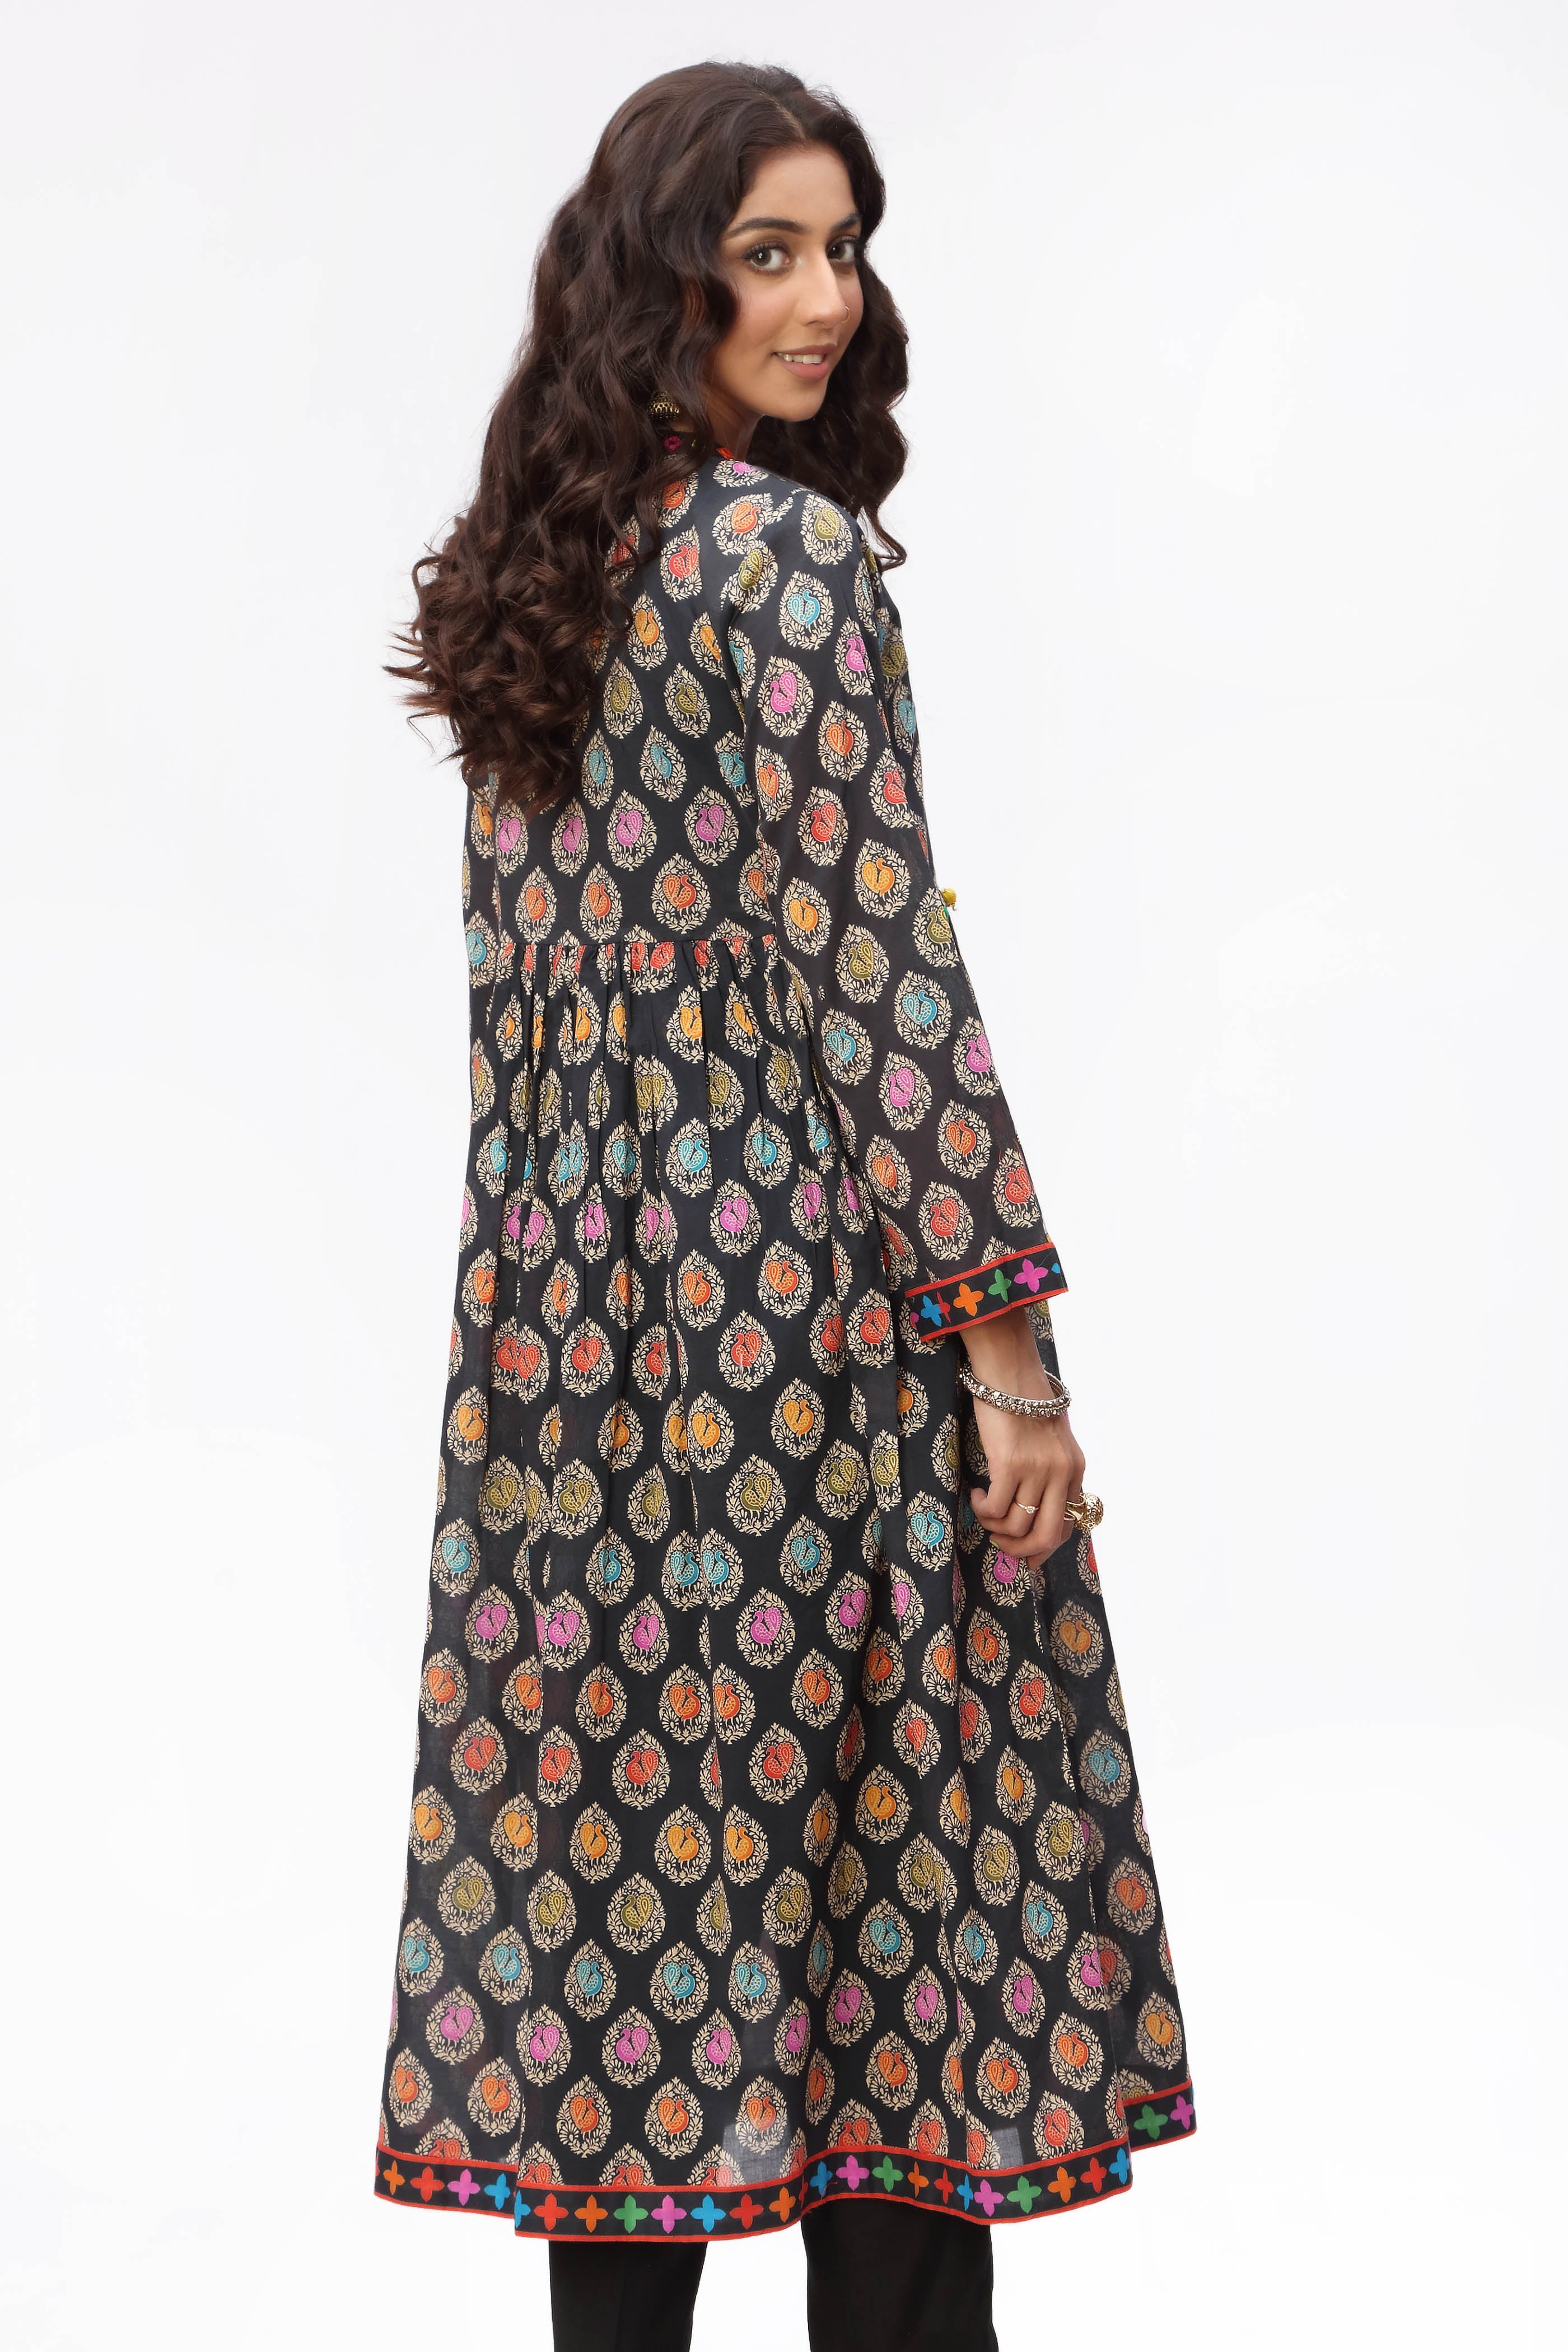 Morr Kahani in Multi coloured Printed Lawn fabric 3